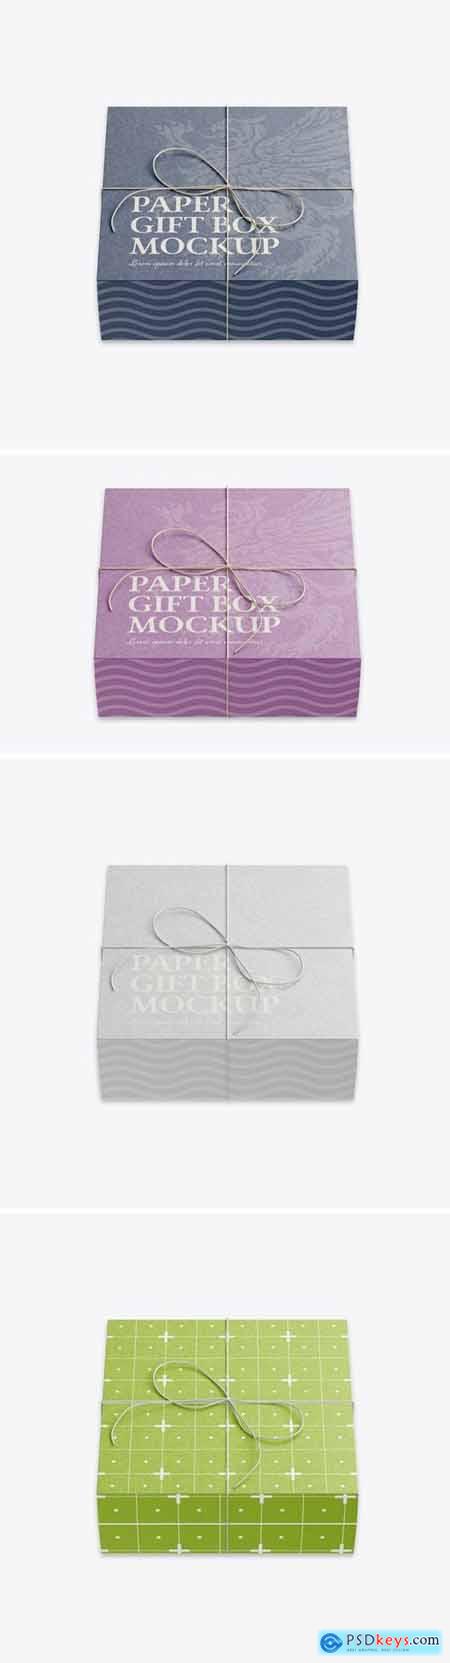 Cardboard Gift Box Mockup 23GWENS